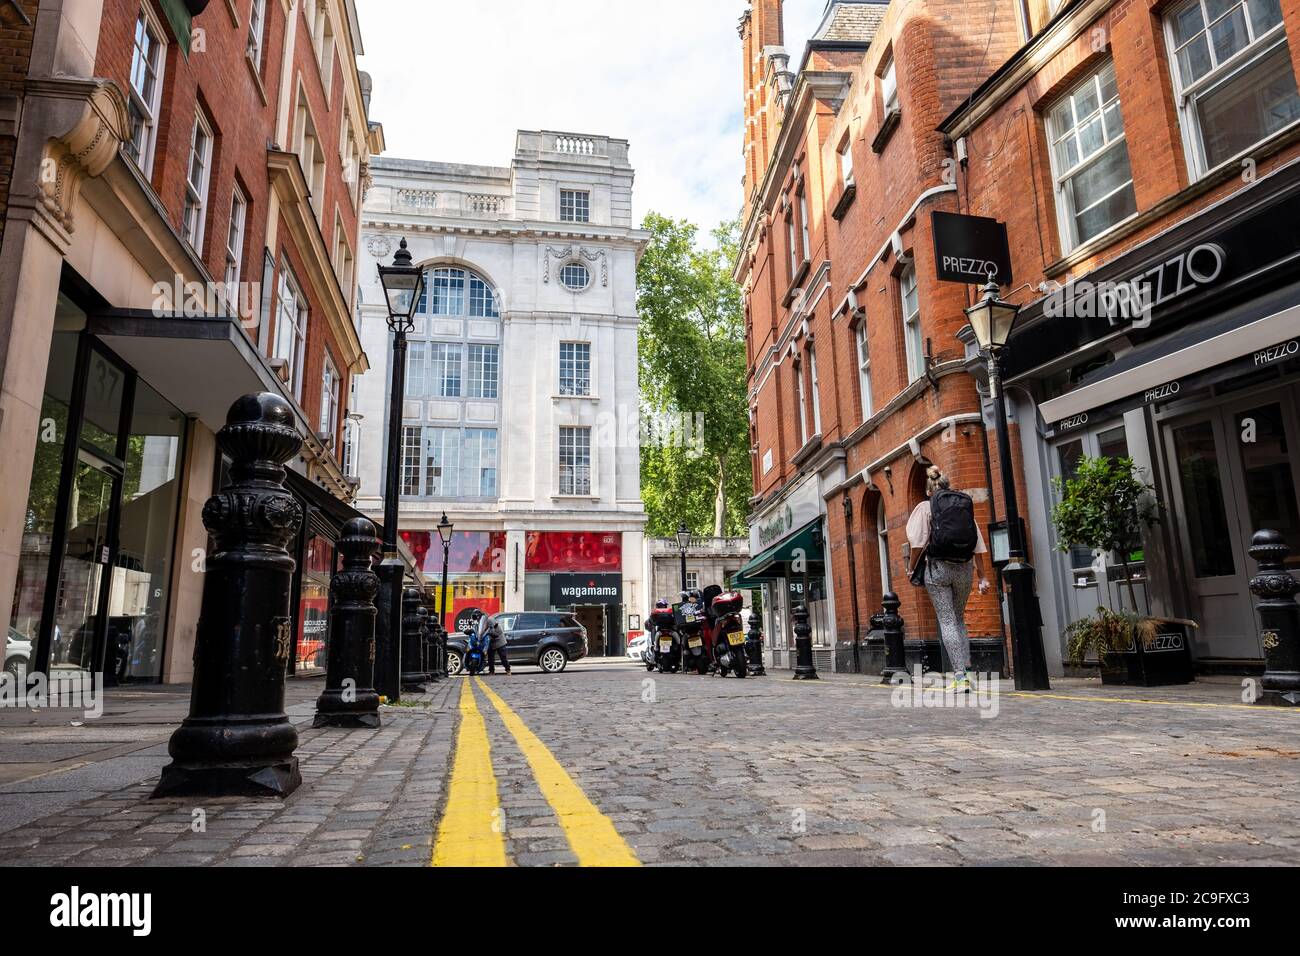 London- July, 2020: Kensington Court, a small sids street of restaurants / shops off Kensington High Street in West London Stock Photo